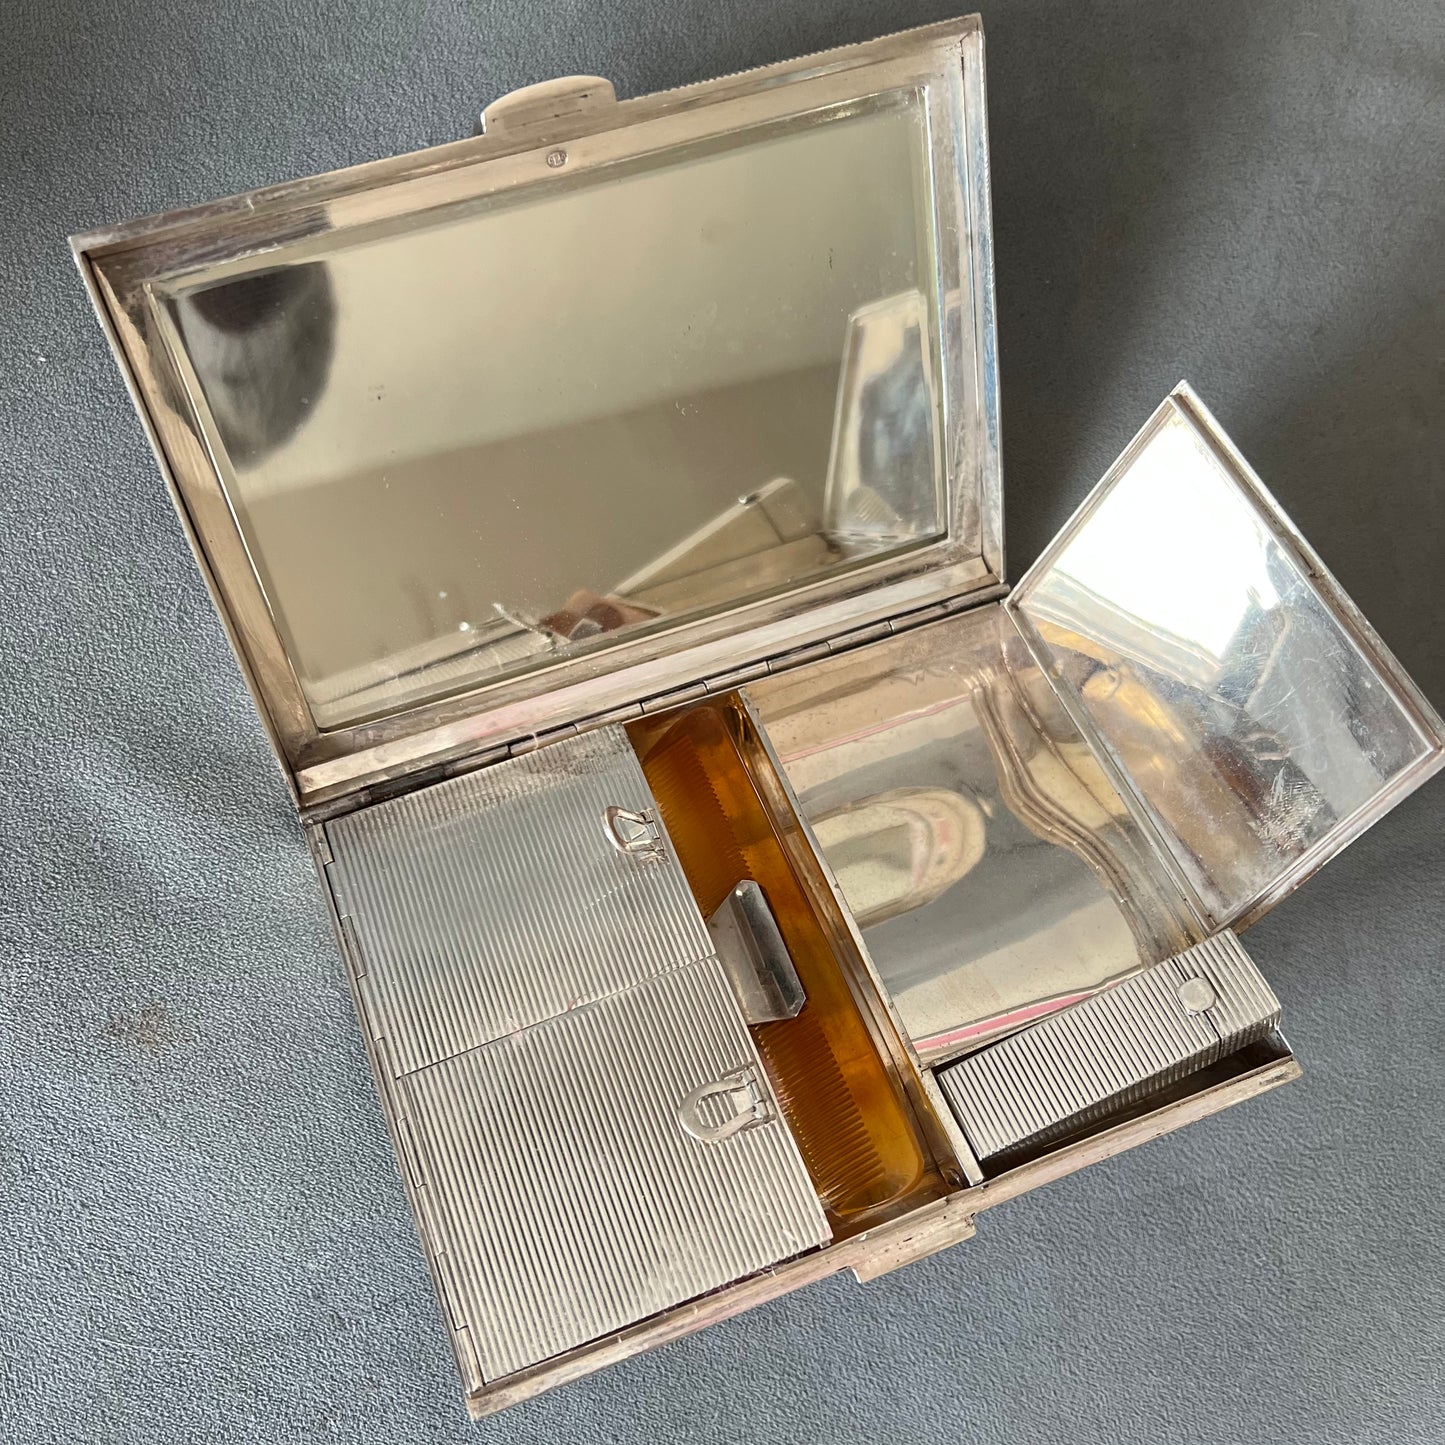 TIFFANY & CO. 925 Sterling Silver Makeup Kit 5.55x4.10x1.5” 580g + Dust Bag + Box